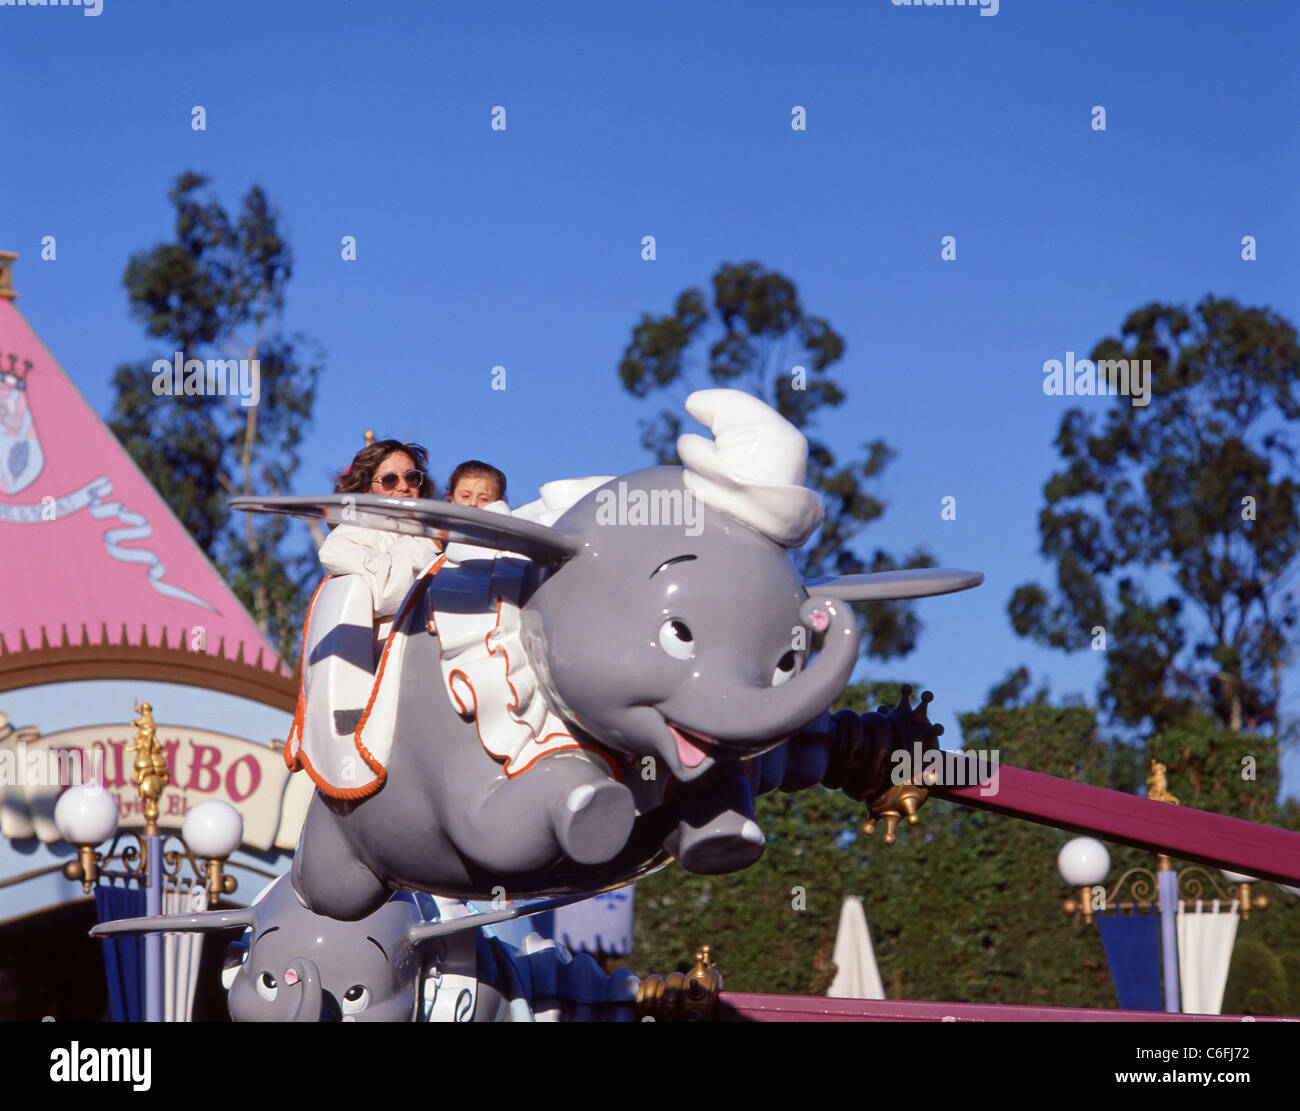 'Dumbo the Flying Elephant' ride, Fantasyland, Disneyland, Anaheim, California, United States of America Stock Photo